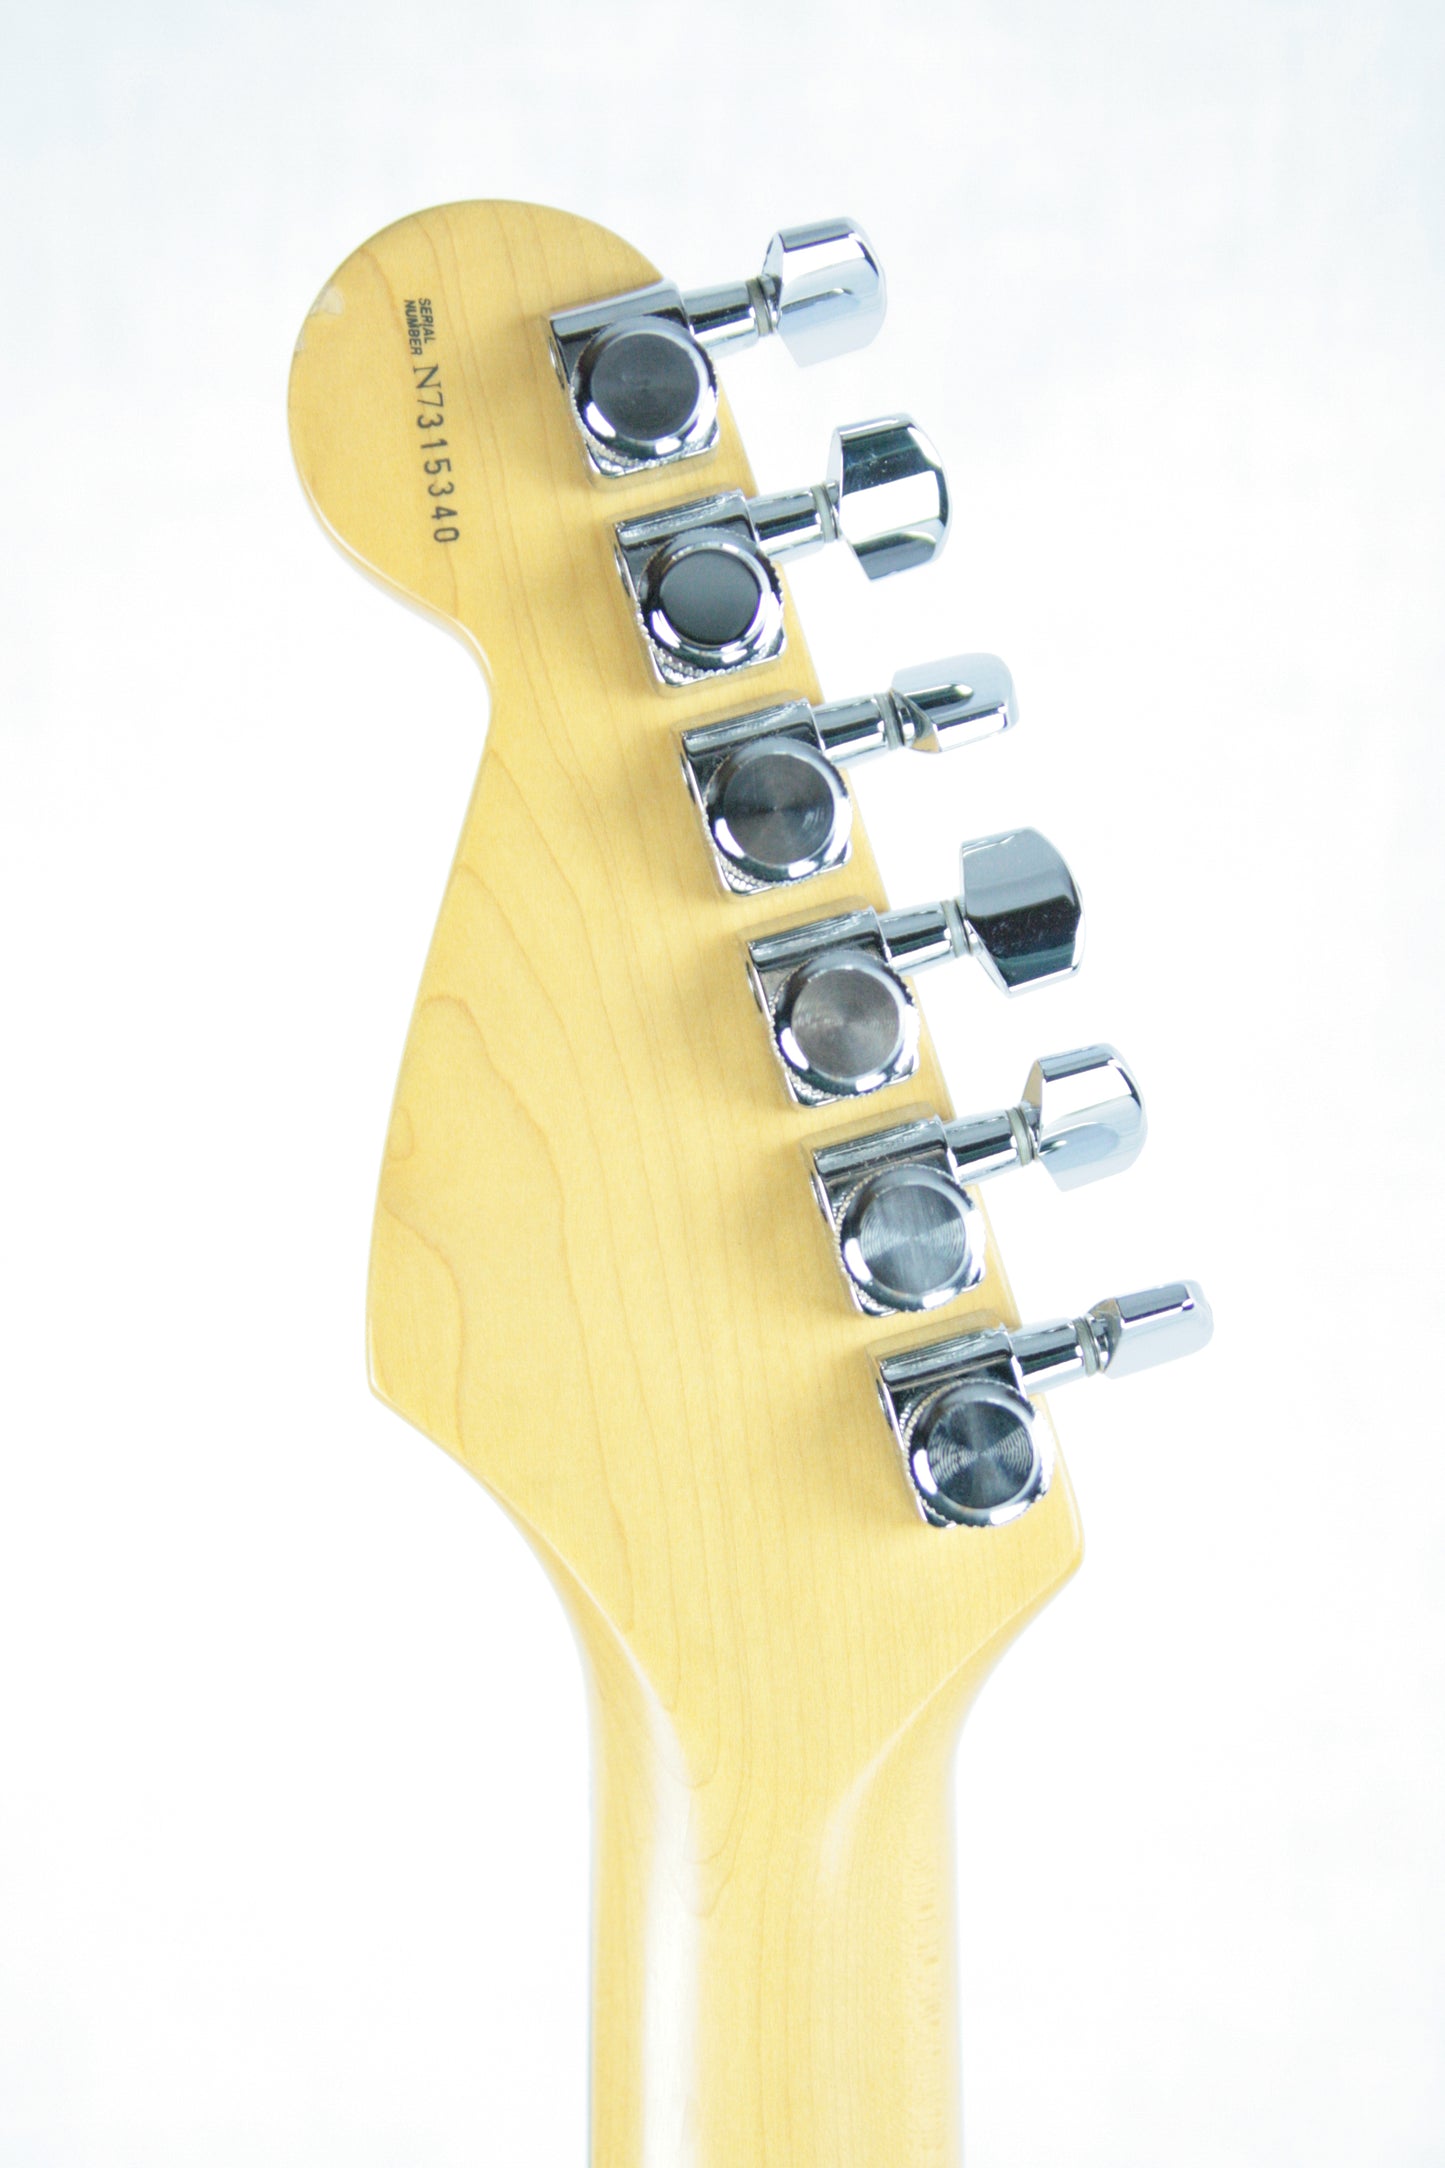 1997 Fender USA Stratocaster ULTRA Flametop! Ebony Board! American Strat